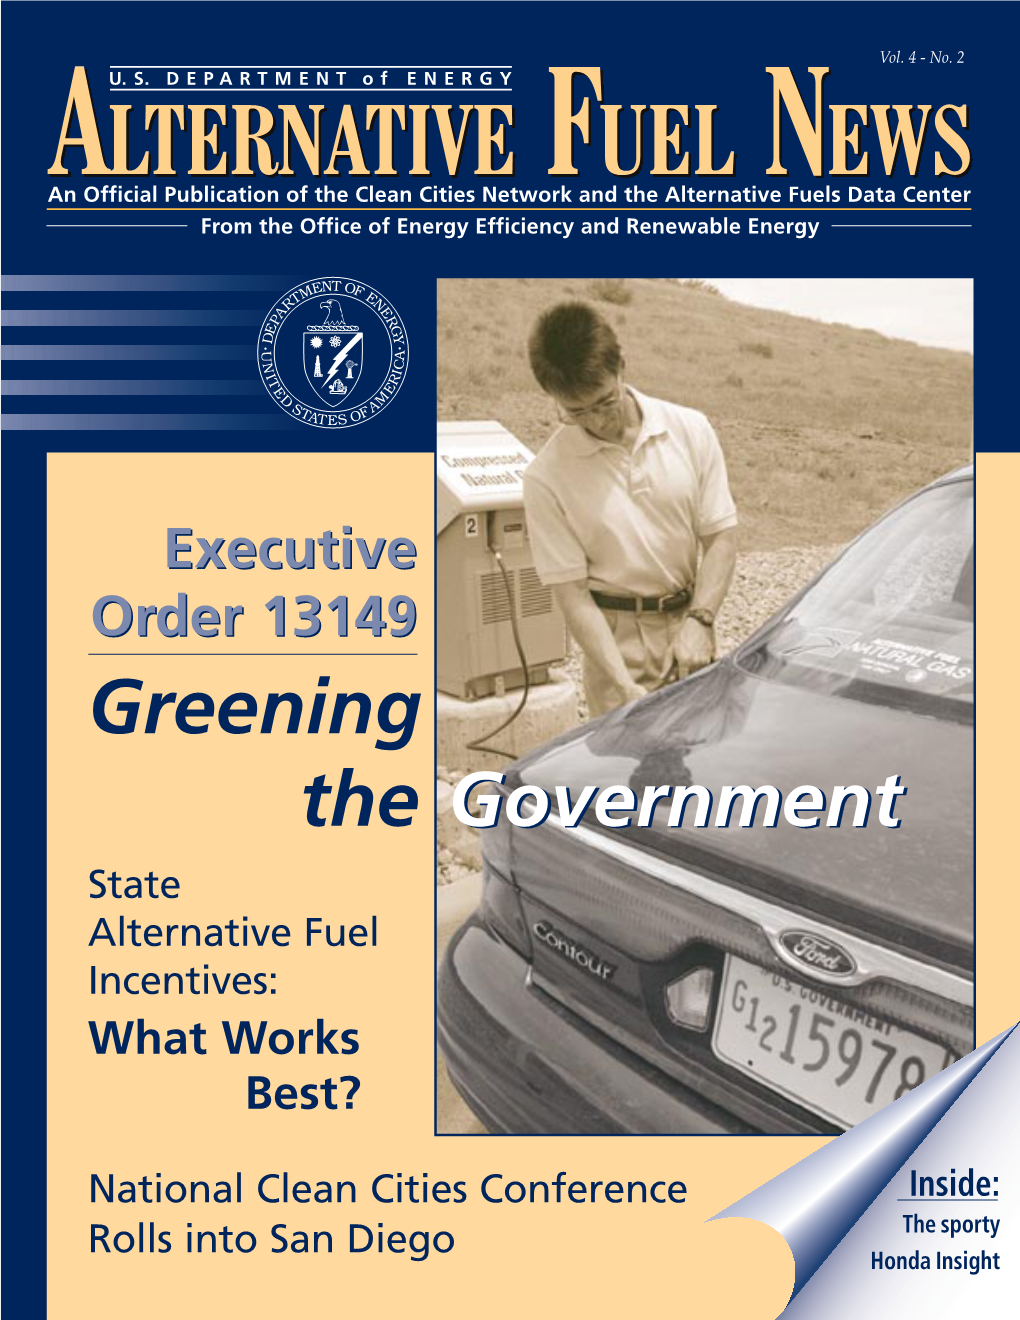 ALTERNATIVE FUEL NEWS Volume 4 Number 2 August 2000